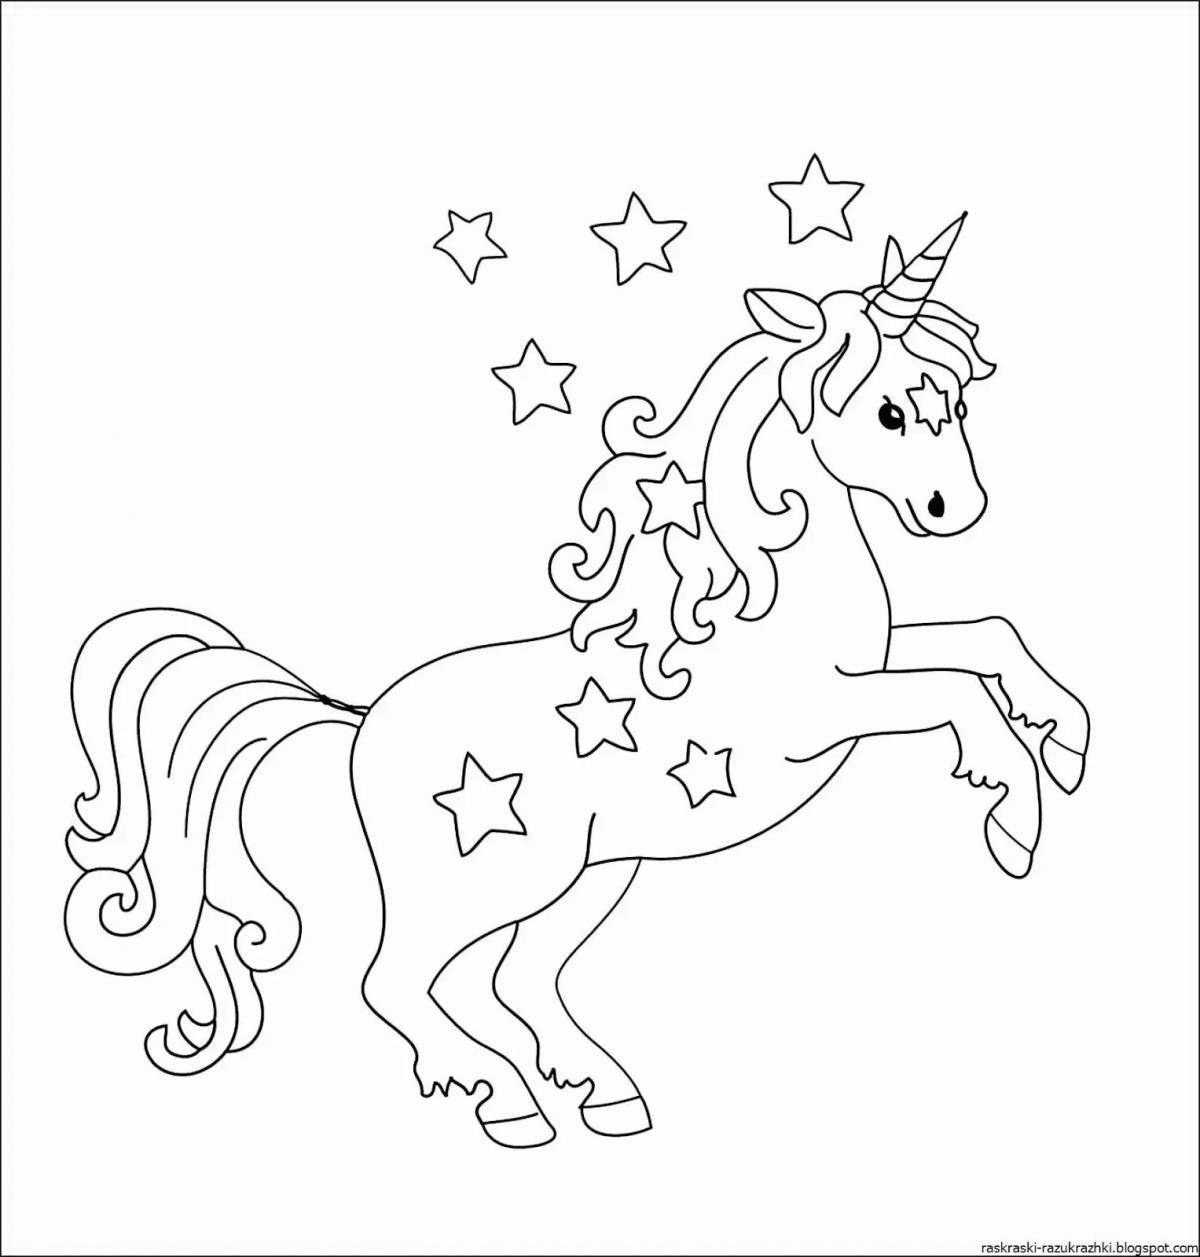 Rampant Christmas unicorn coloring book